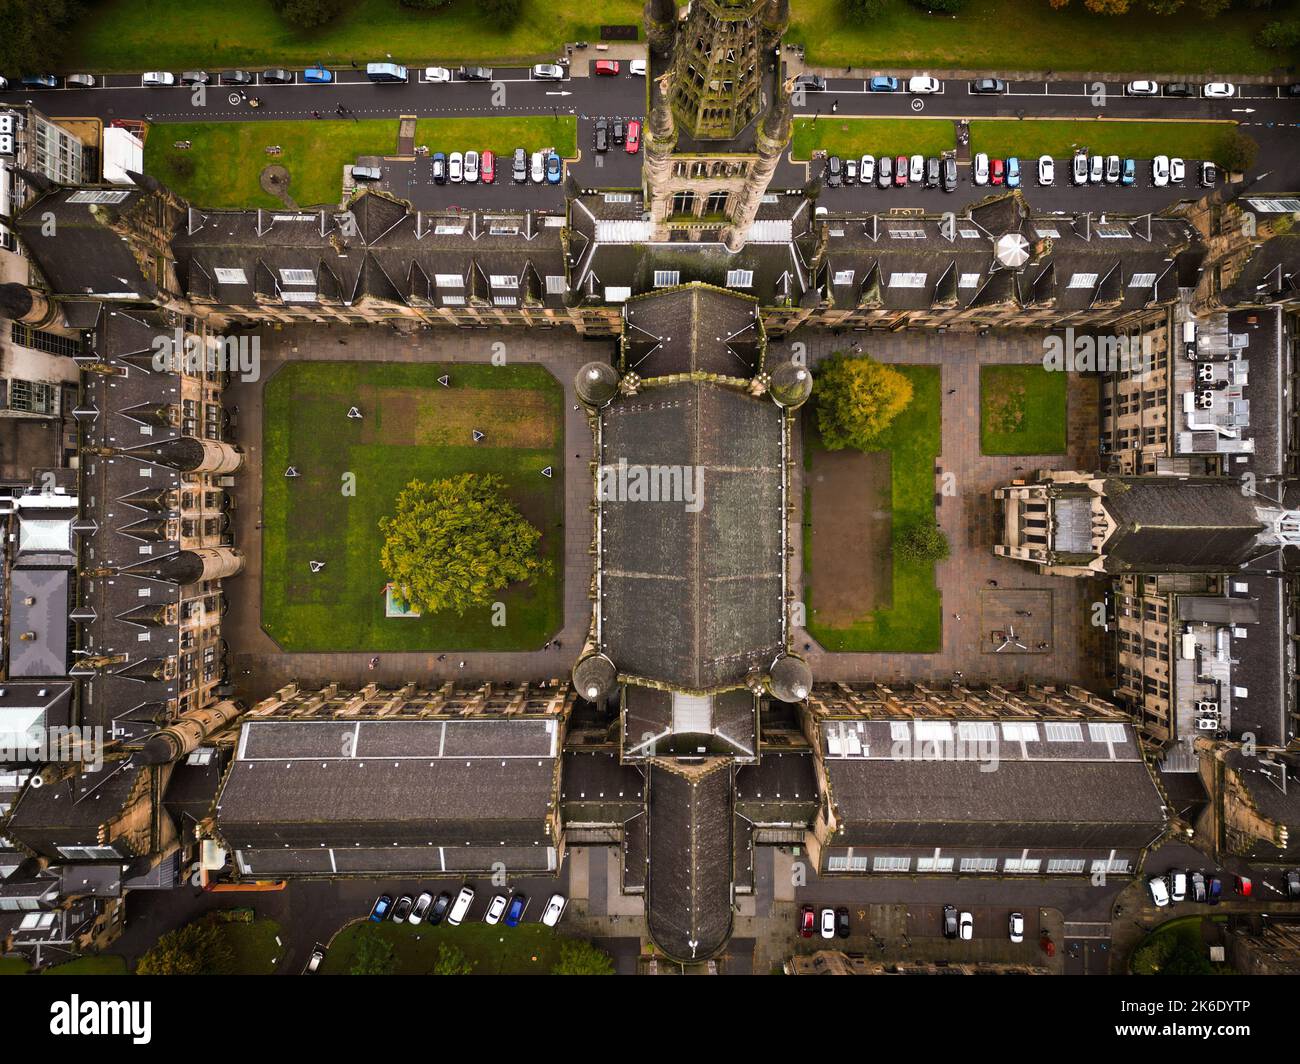 Glasgow University von oben - Luftaufnahme Stockfoto